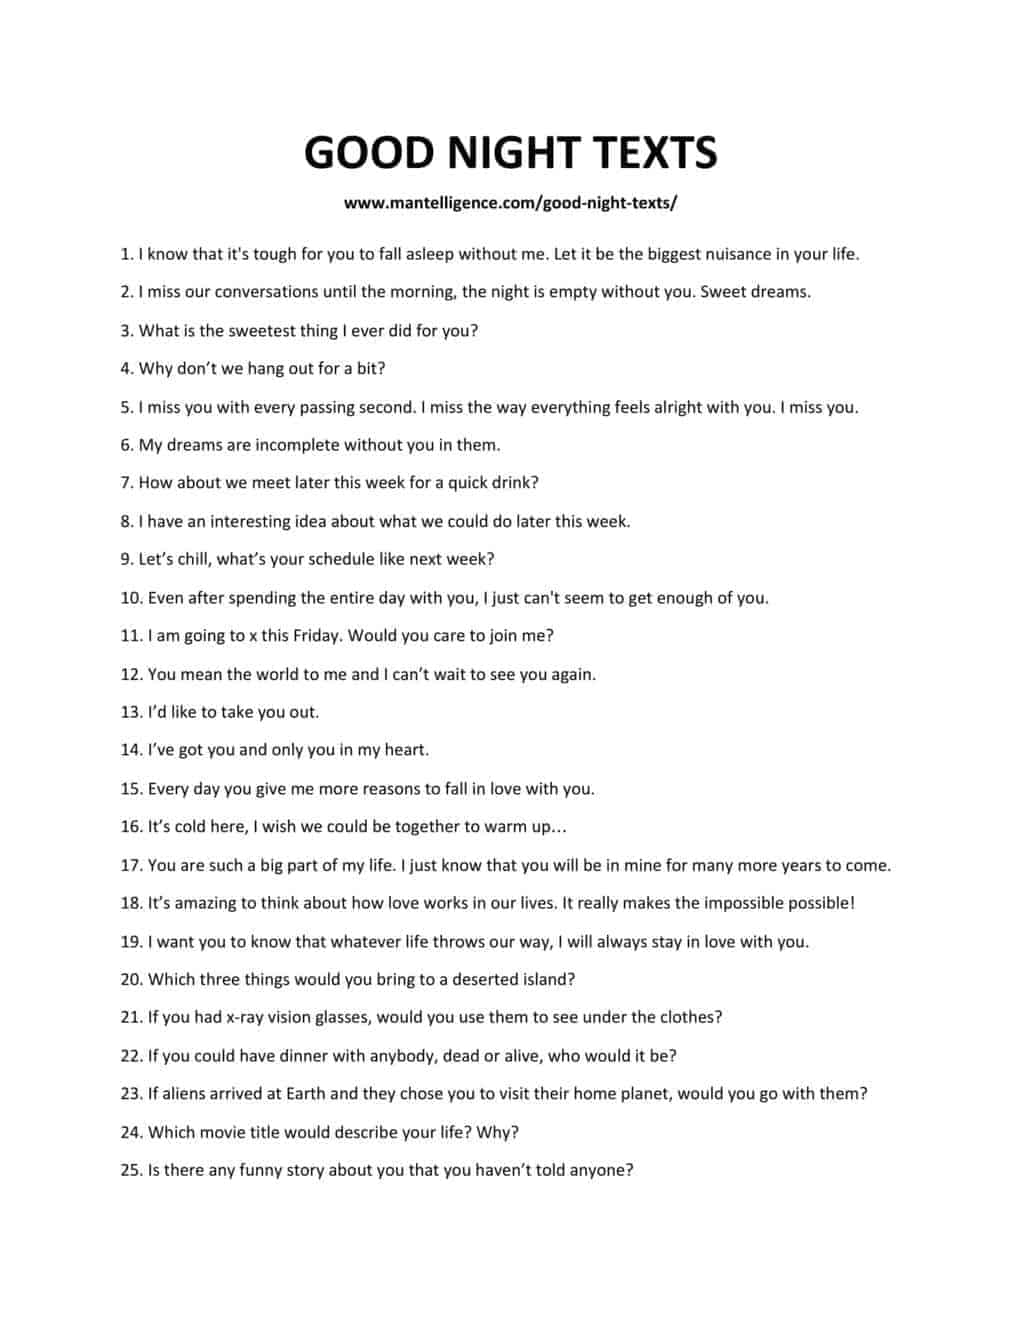 goodnight beautiful text